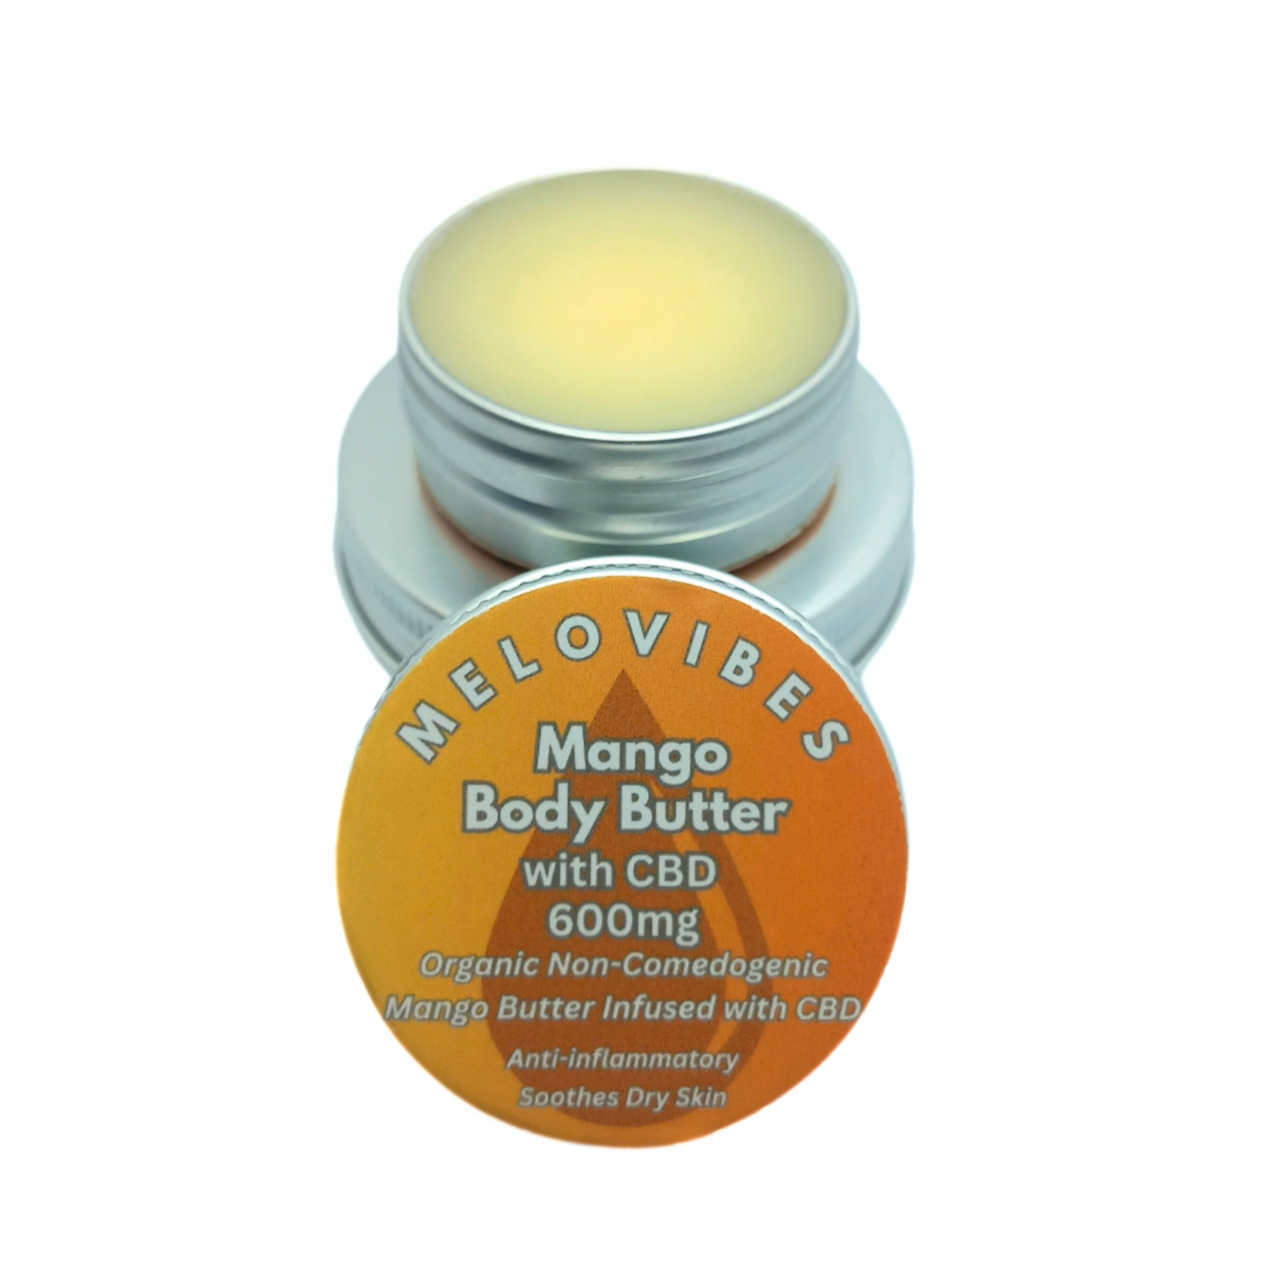 Melovibes Mango Body Butter with 600mg CBD - 15ml Volume - Non-comedogenic Skin Rub